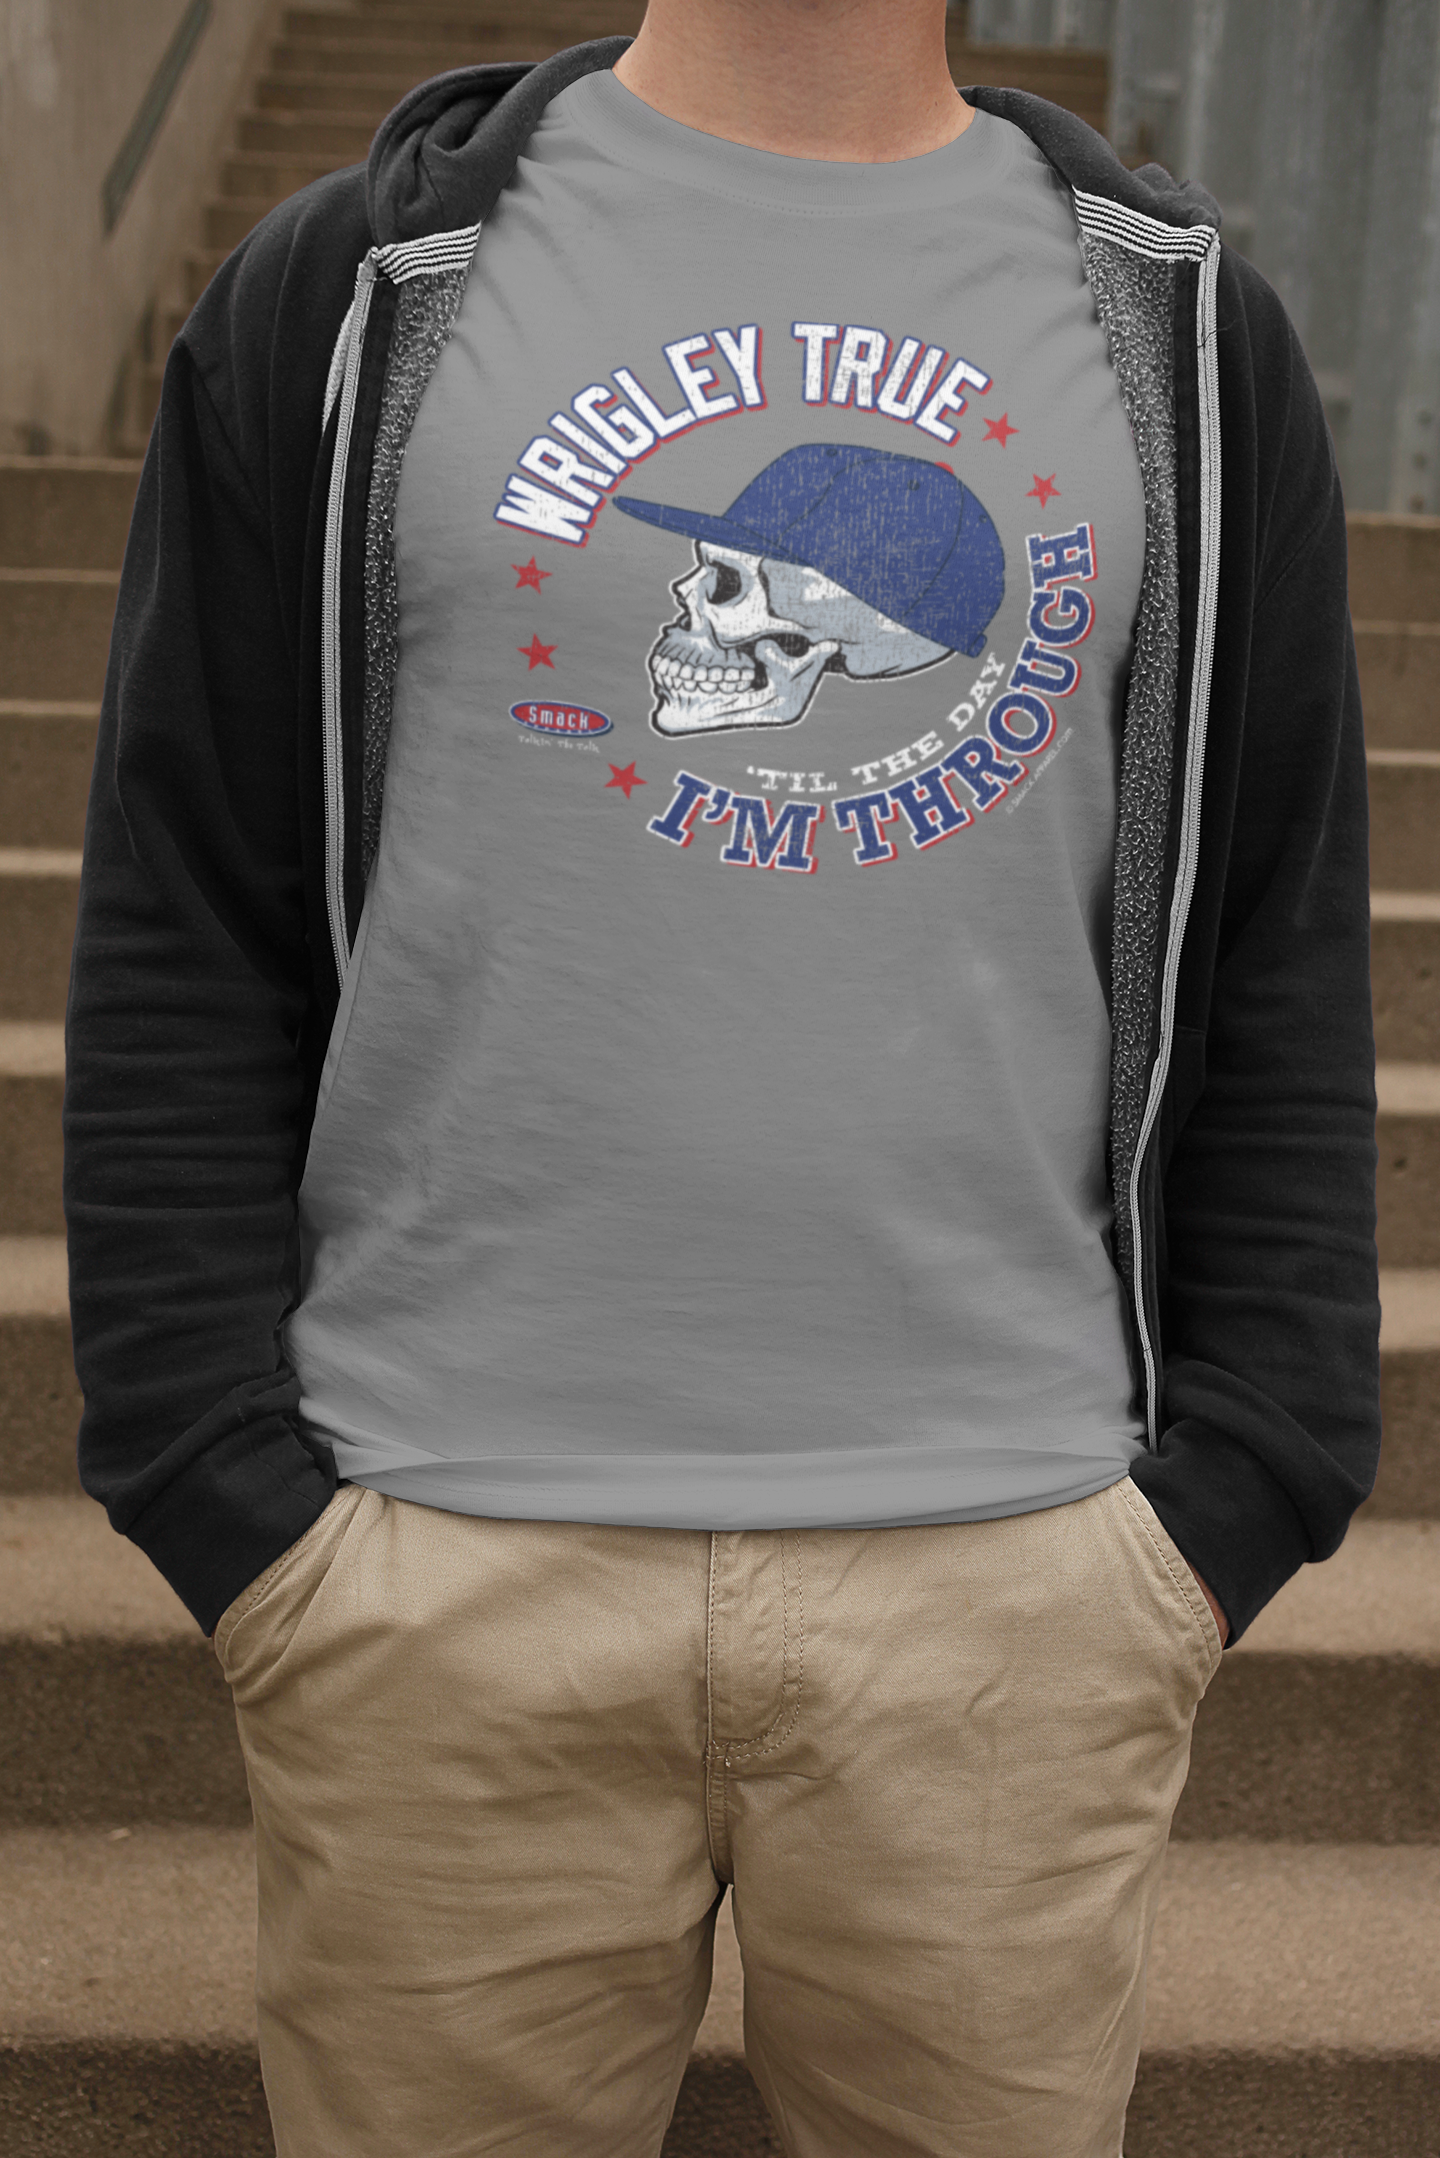 Smack Apparel Wrigley True 'Til The Day I'm Through Shirt | Chicago Pro Baseball Fan Apparel Long Sleeve / XXXX-Large / Gray